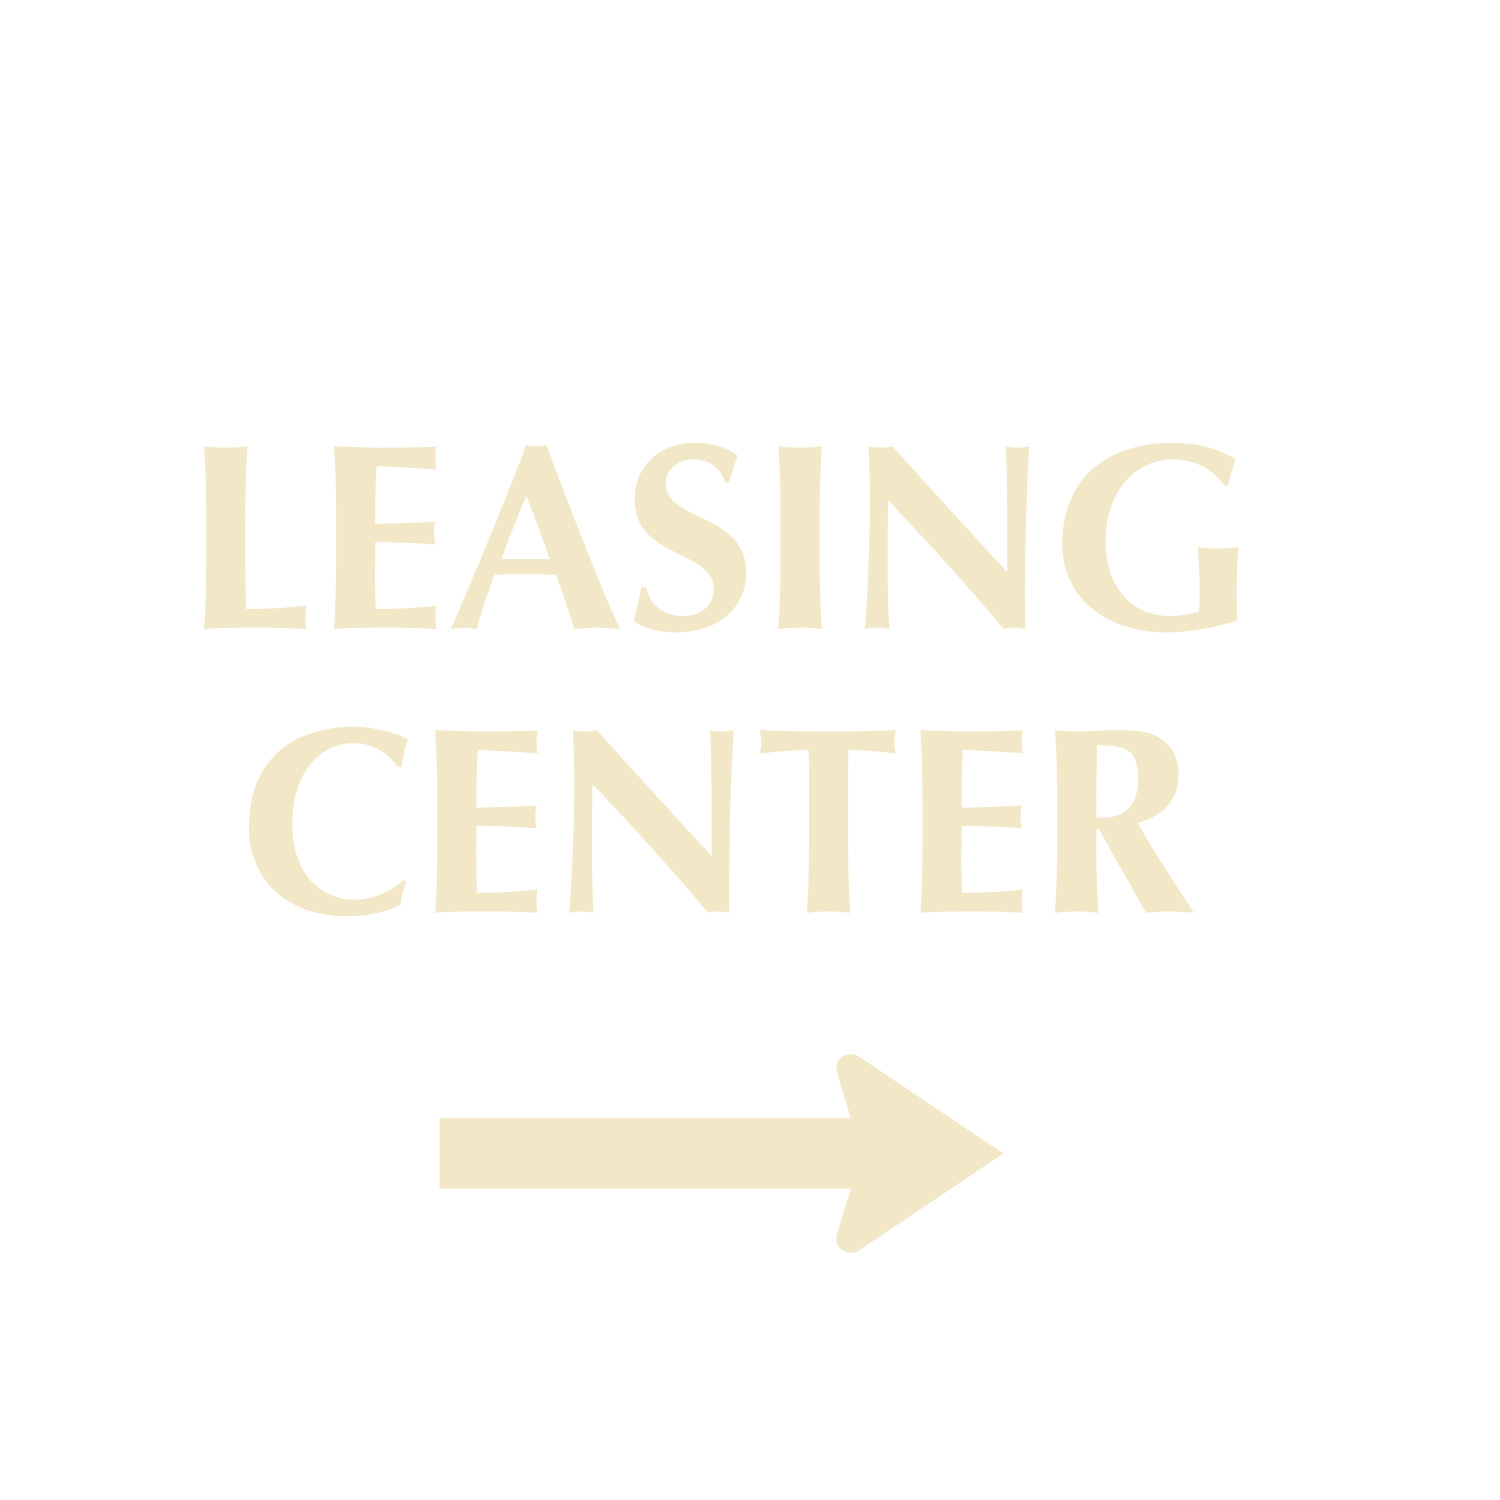 Designer Leasing Center Sign with Arrow